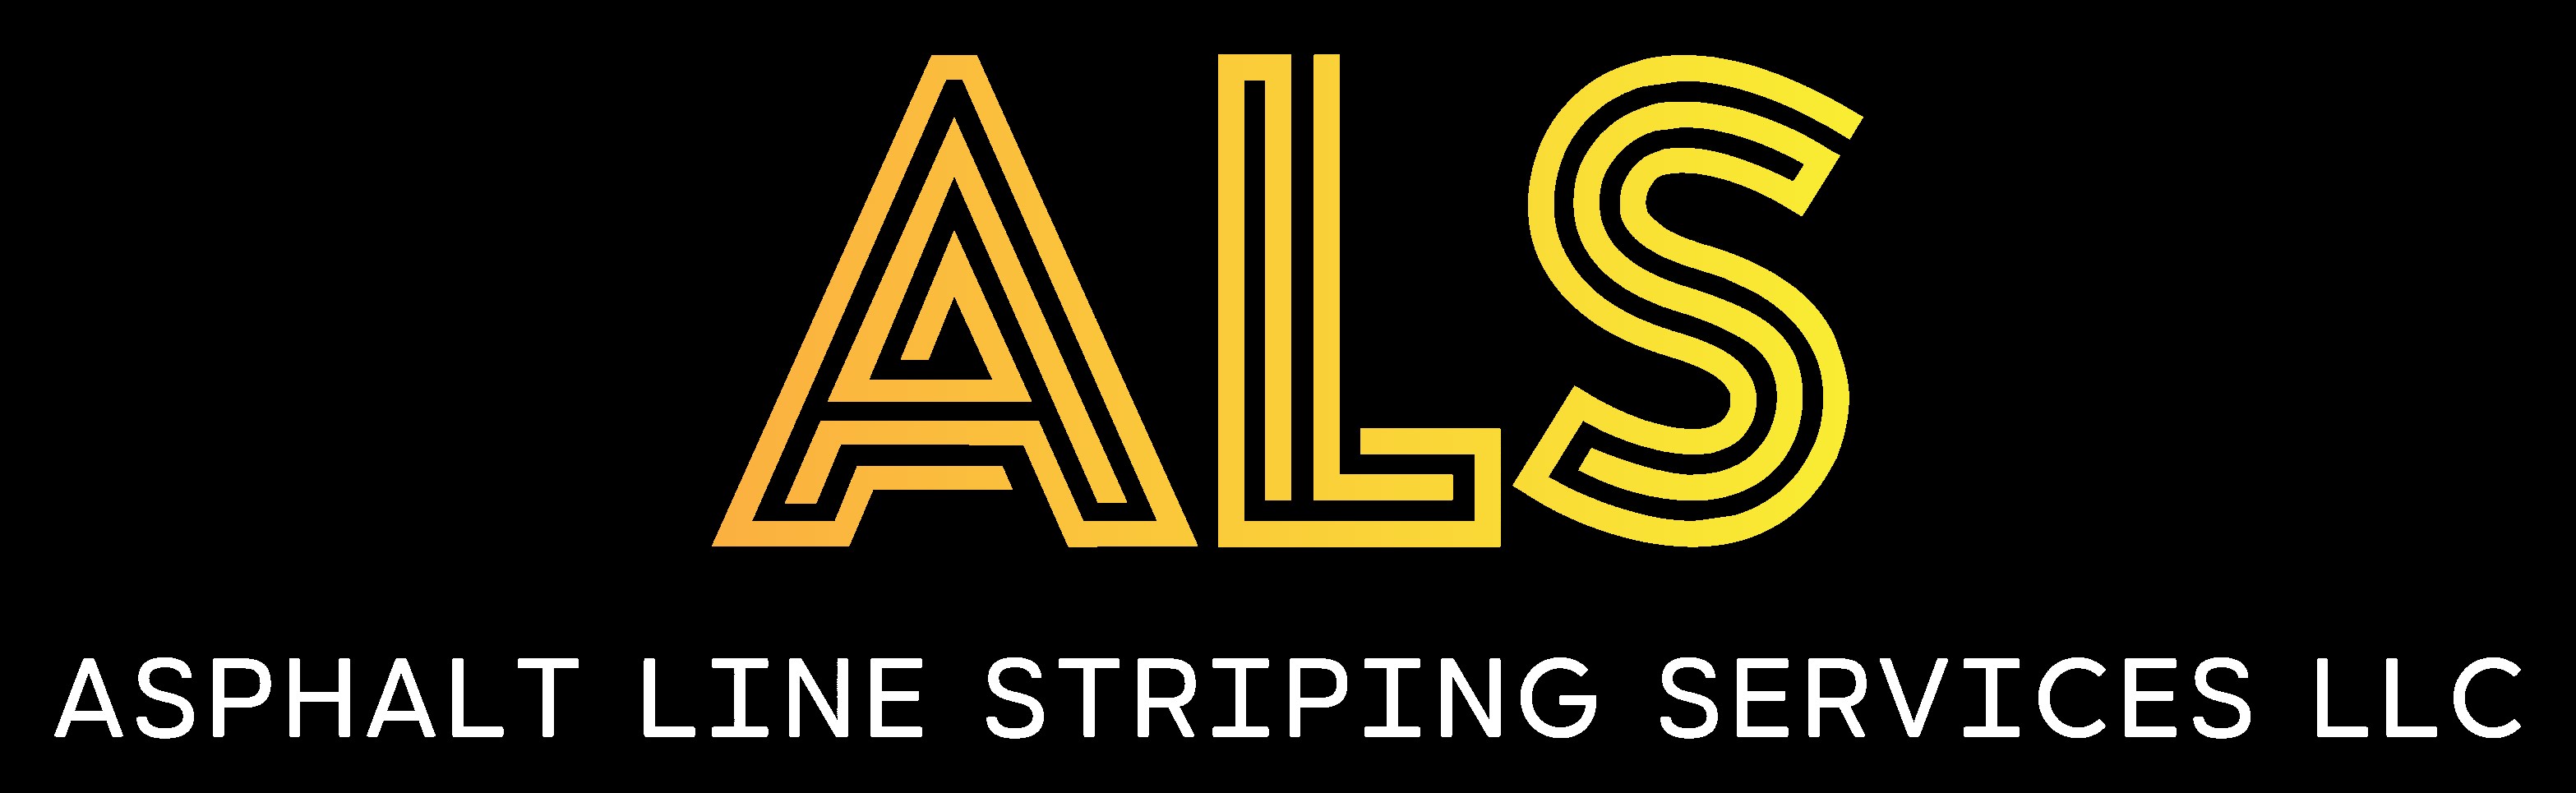 Asphalt Line Striping Services LLC Logo